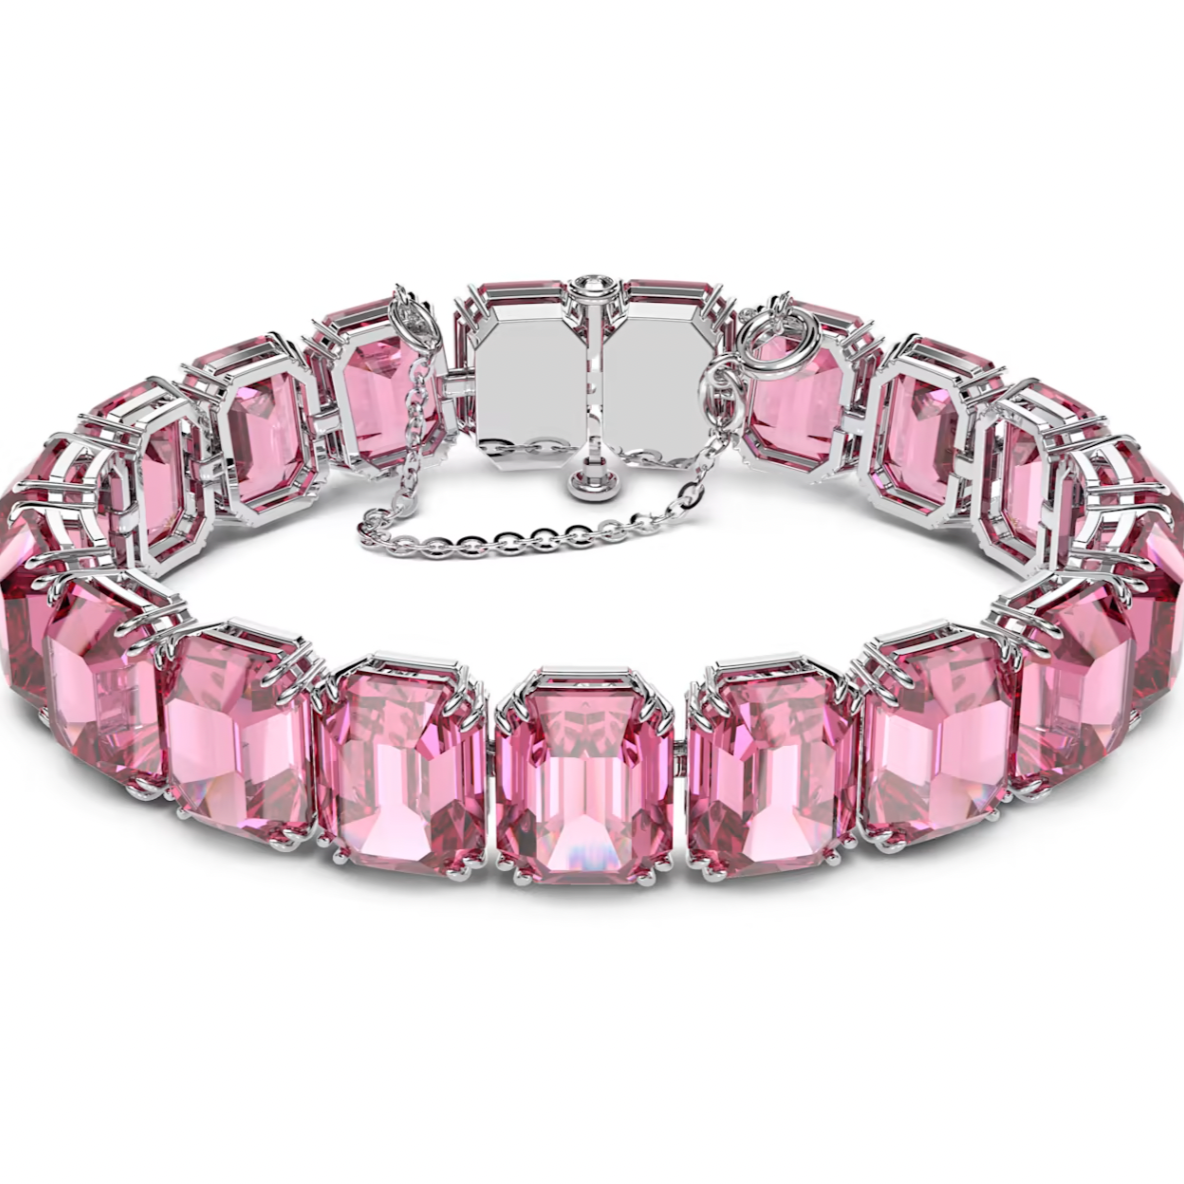 Block-crystal bracelet